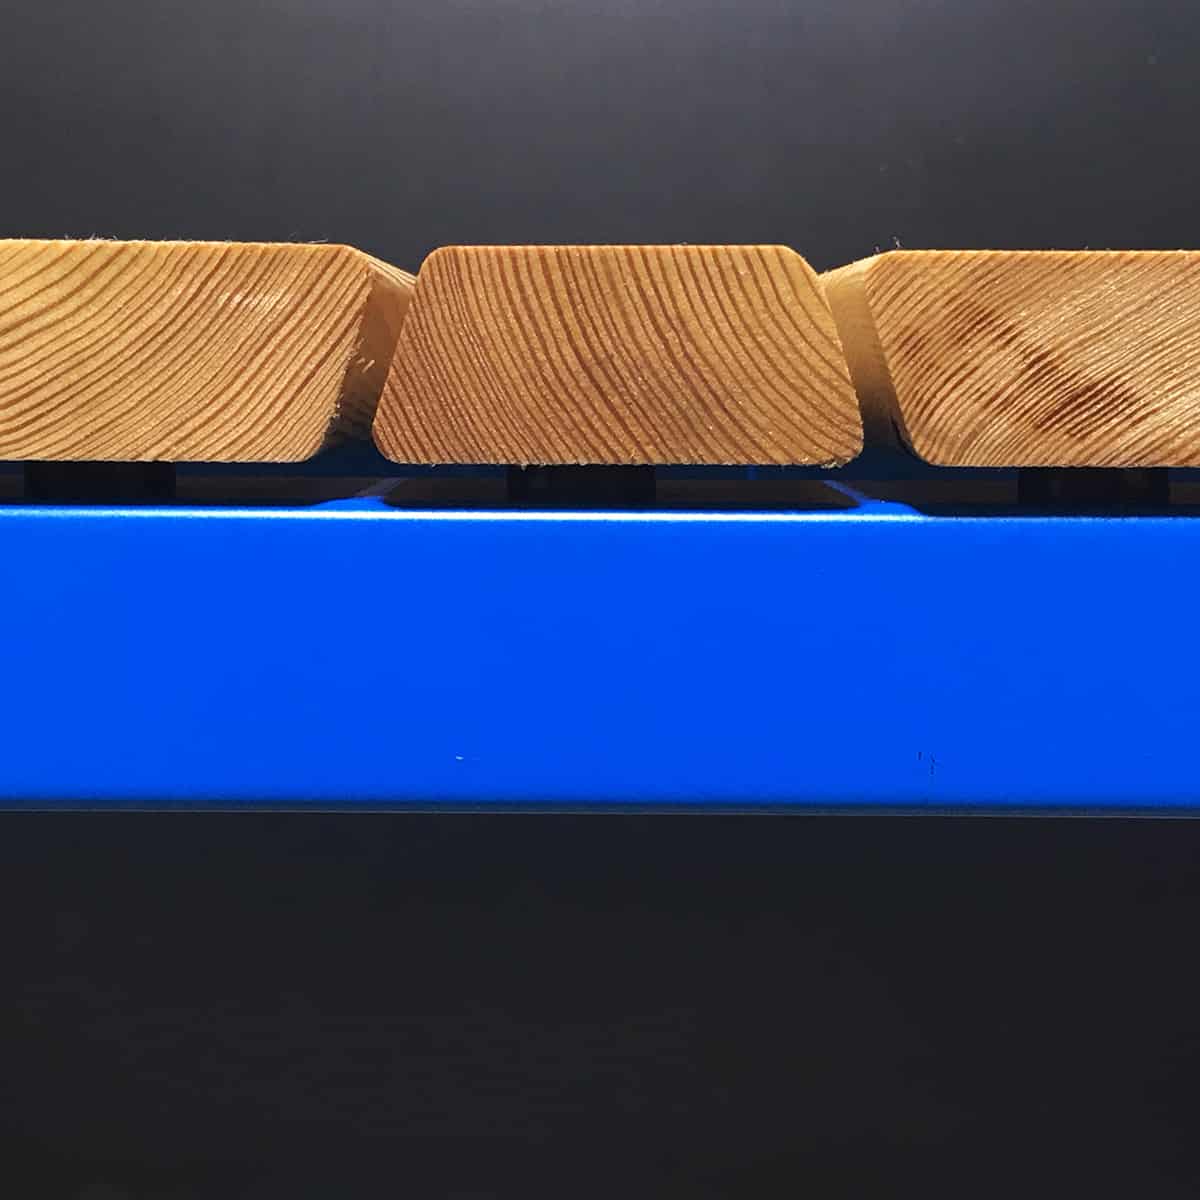 gartenbank-detail-holz-wetterfest-metall-bauen-modern-massiv-aluminium-alu-massivholz-cool-design-ohne-lehne-sibirische-laerche-lattung-blau-made-in-germany-stahlzart